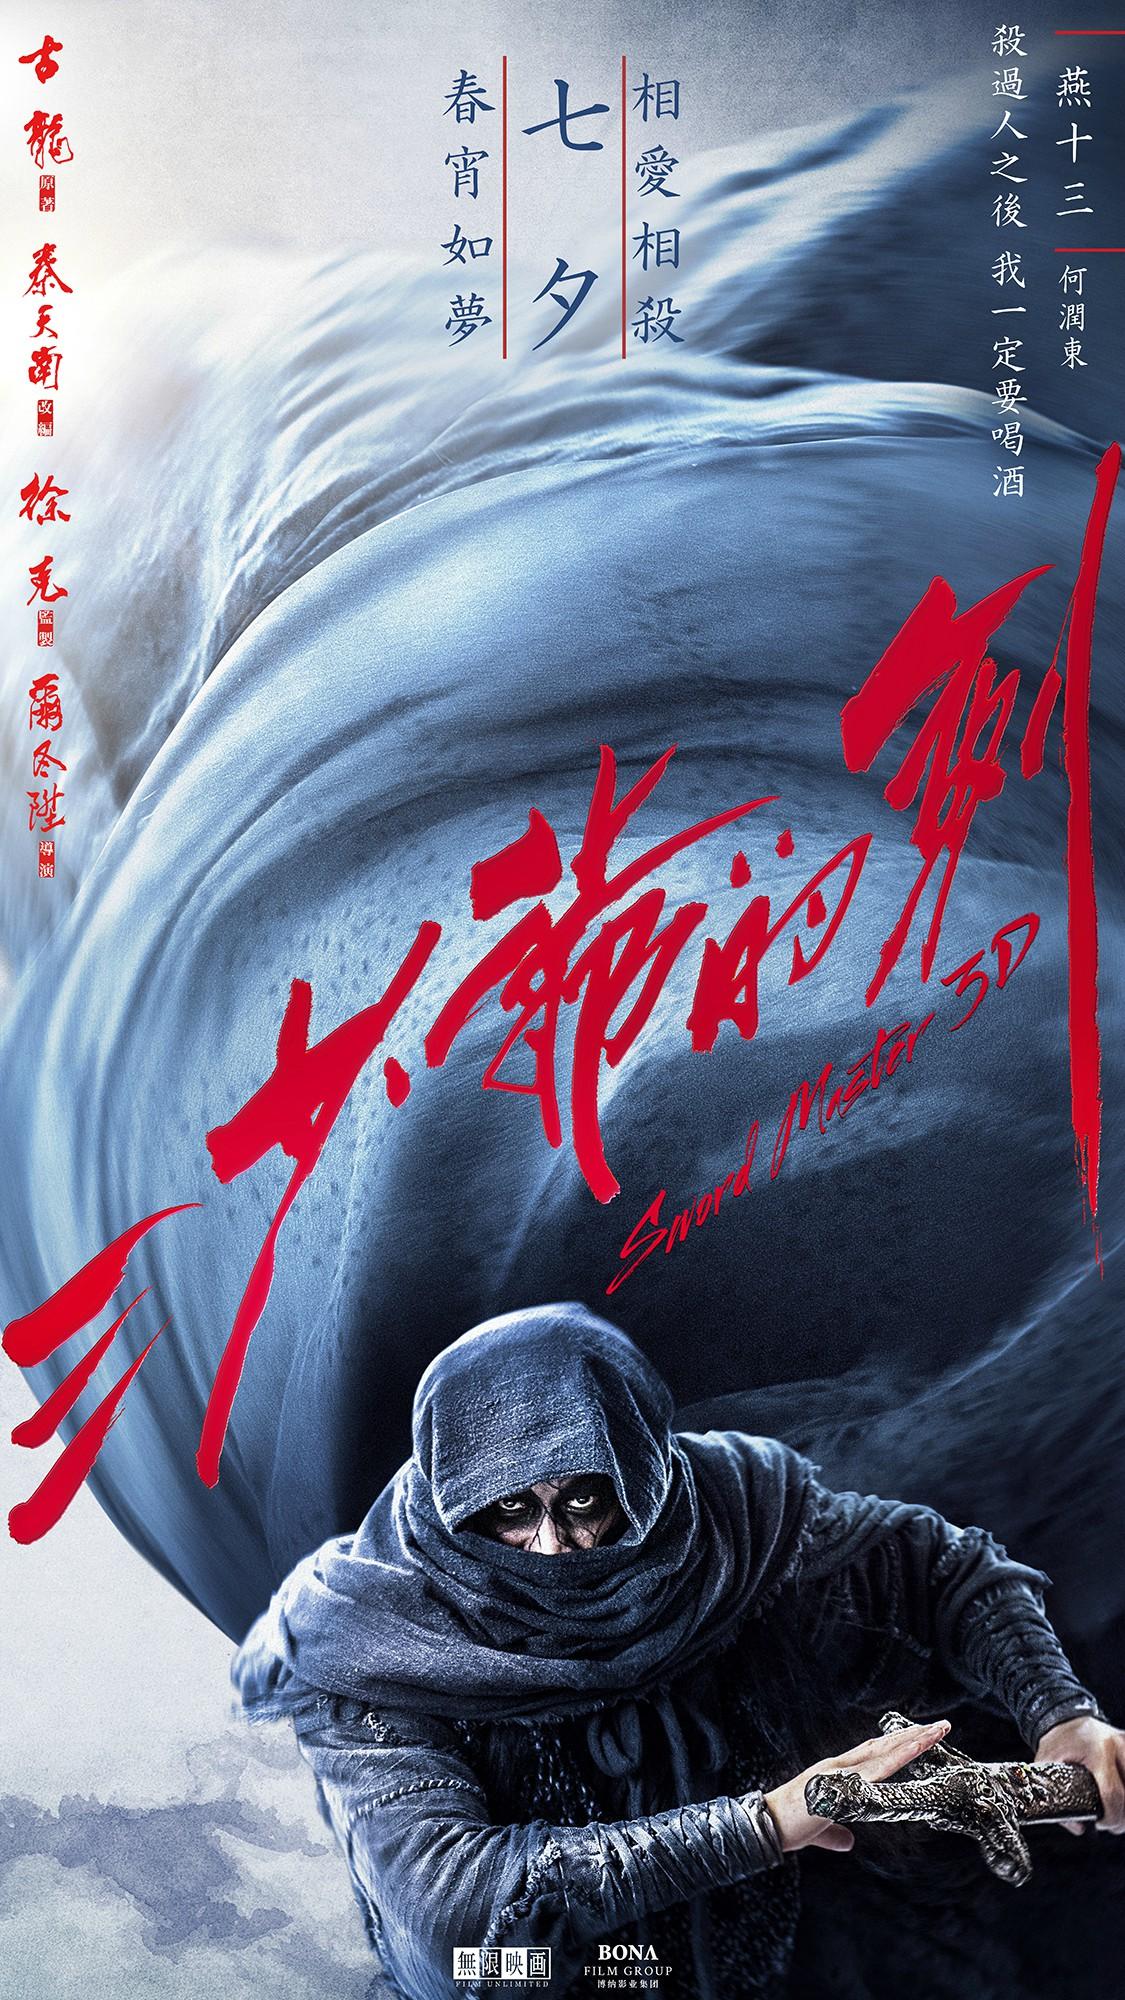 San shao ye de jian (#8 of 11): Mega Sized Movie Poster Image - IMP Awards